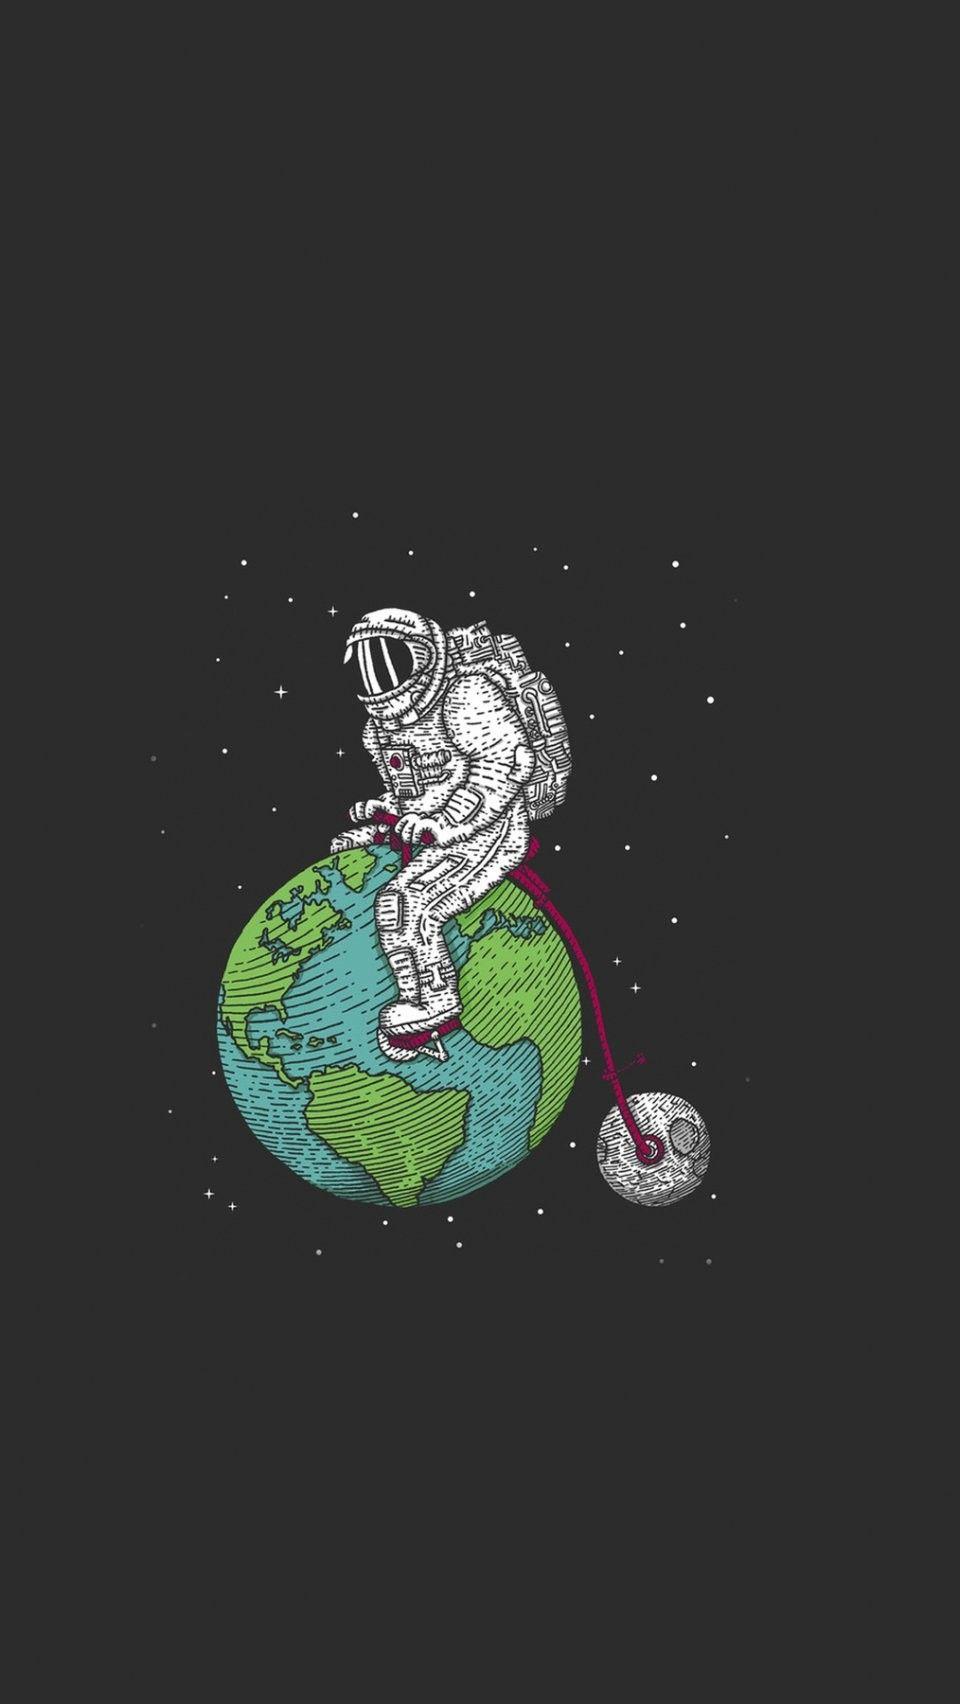 Astronaut spacesuit, gulf, stars, moon, earth, planets, moon, biking, min. Papel de parede engraçado iphone, Galeria de papel de parede, Papel de parede do iphone